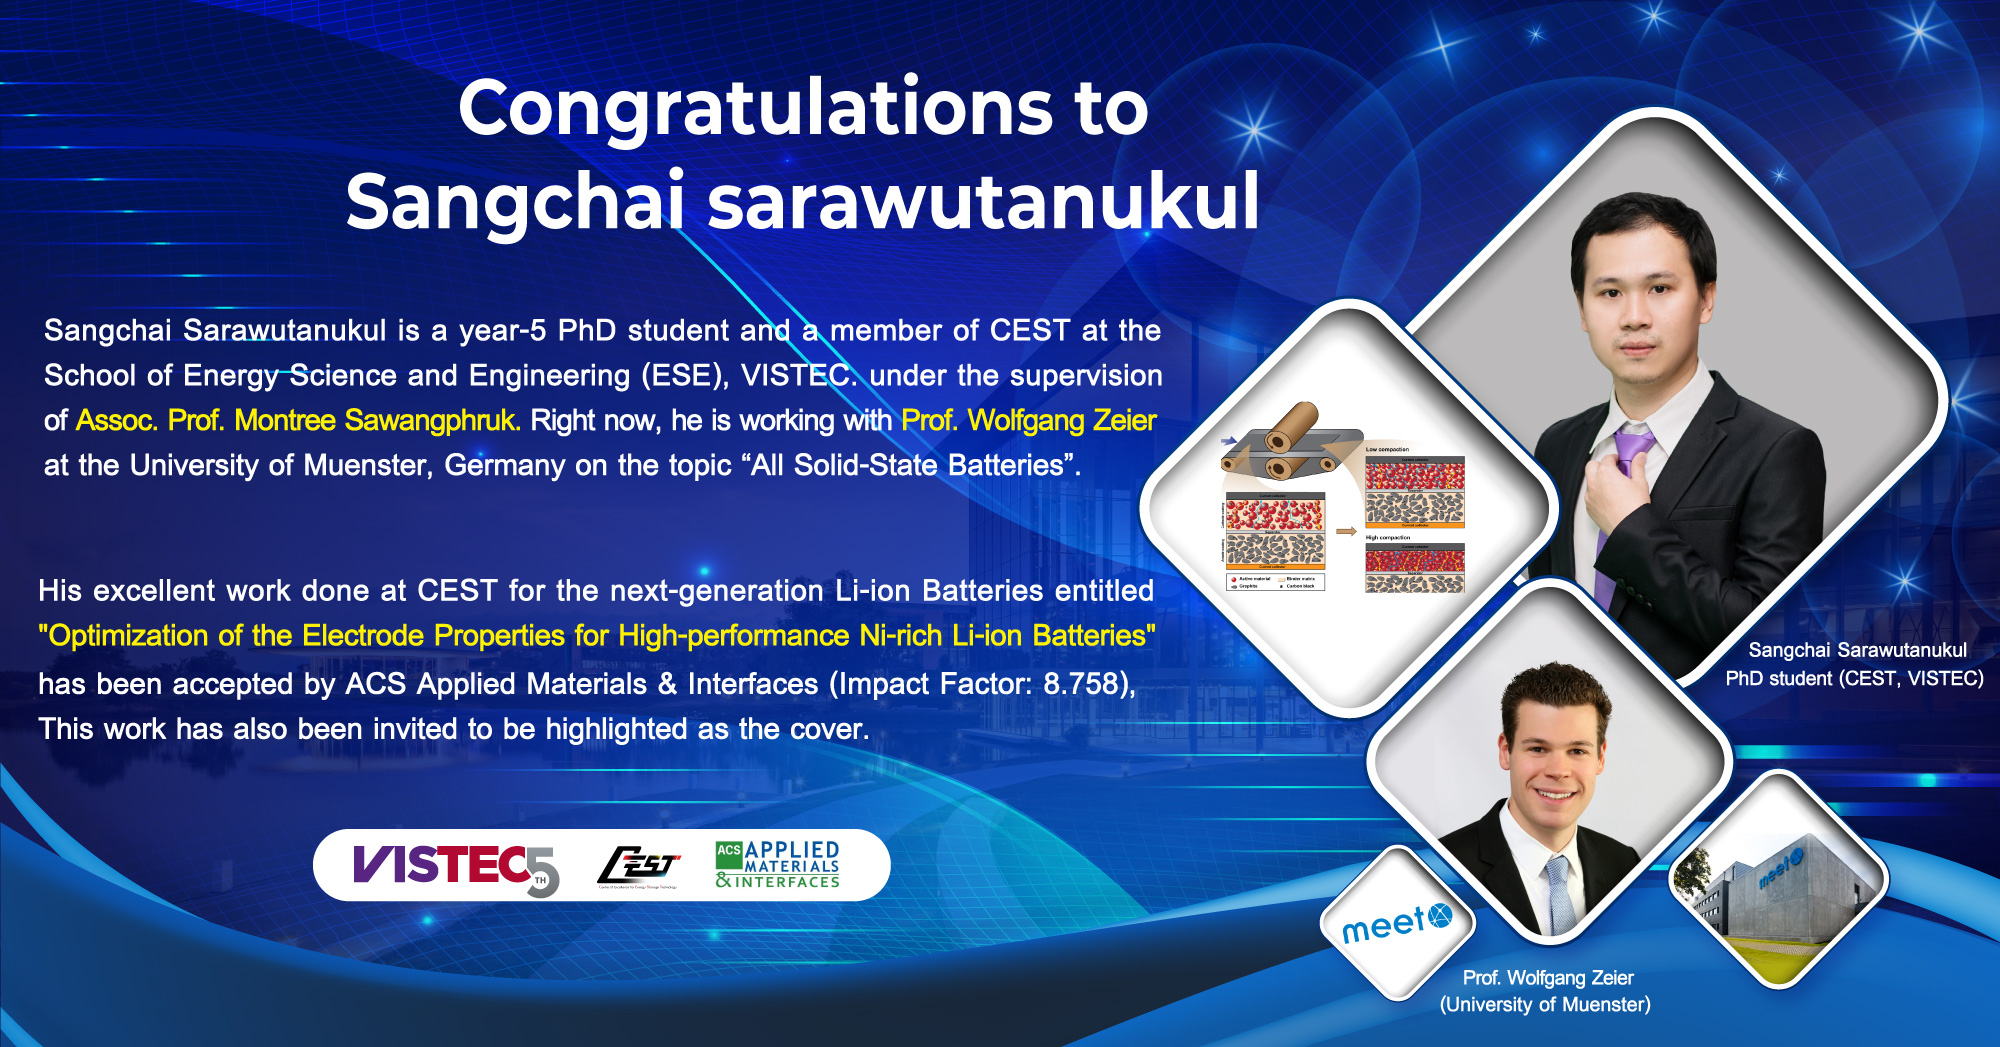 Congratulations Once Again to Sangchai Sarawutanukul